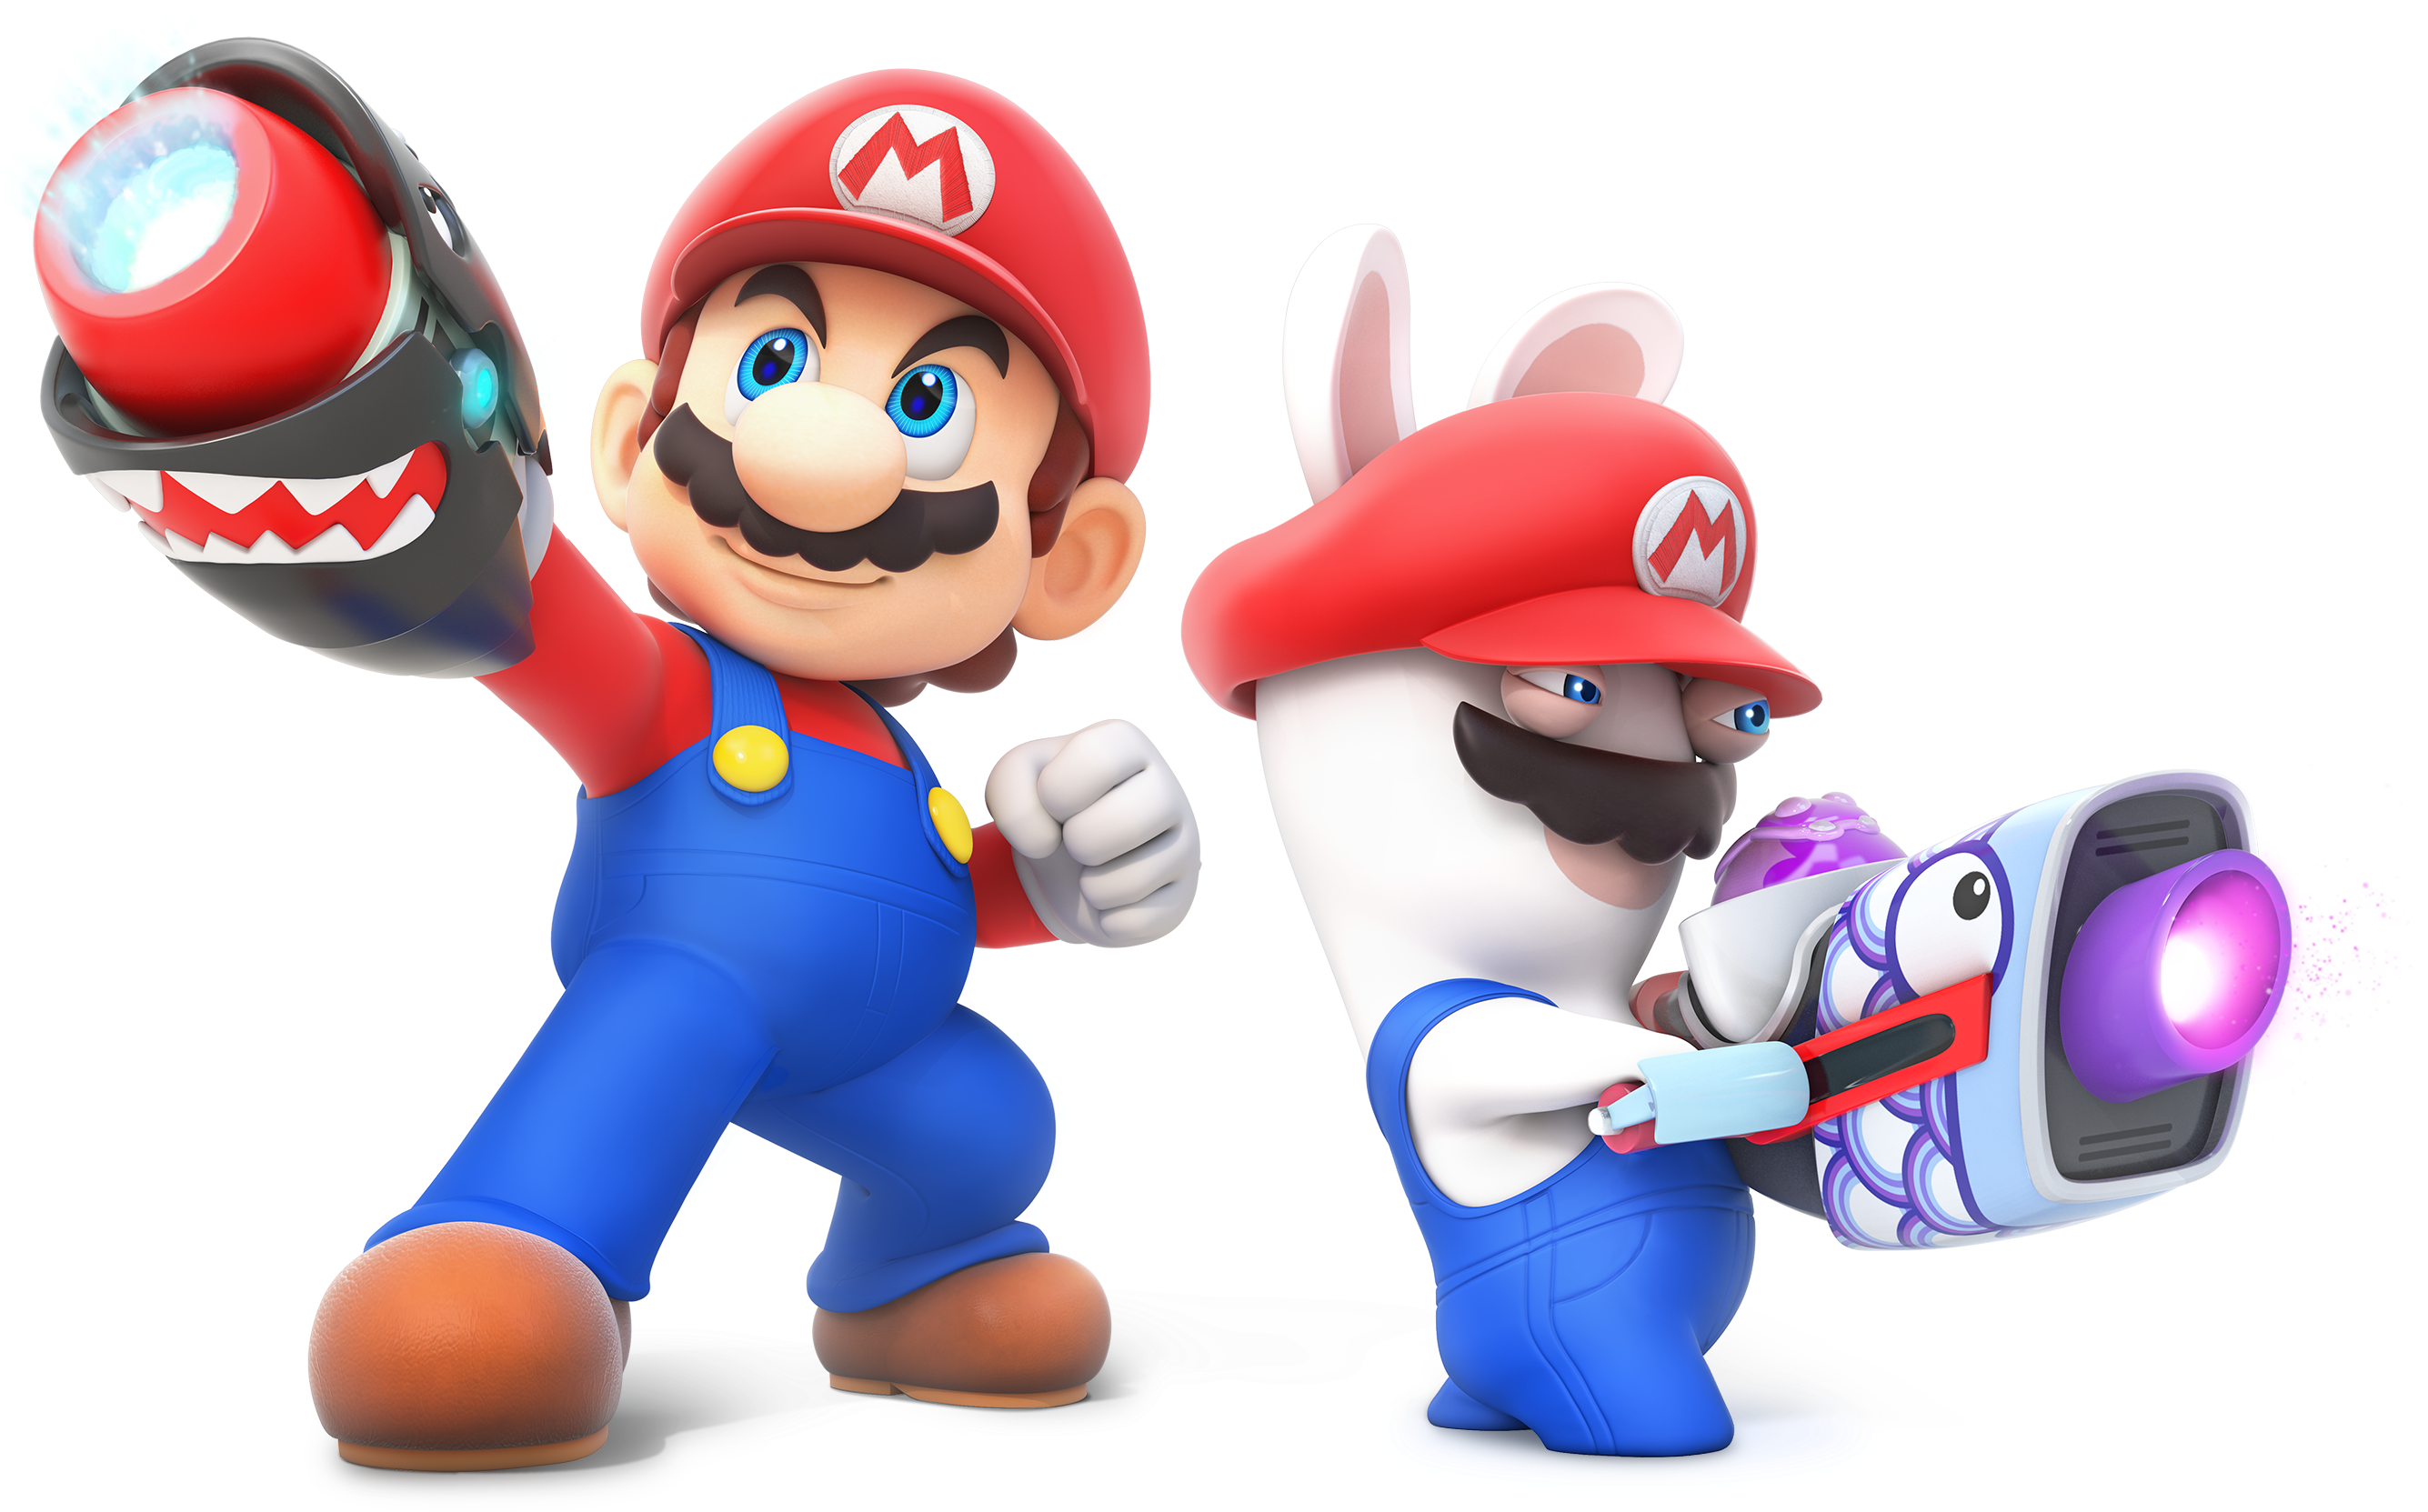 Mario bros nintendo switch. Mario Rabbids Nintendo Switch. Mario Rabbids Kingdom Battle Nintendo Switch. Кролик Марио Нинтендо. Марио и кролики Нинтендо свитч.